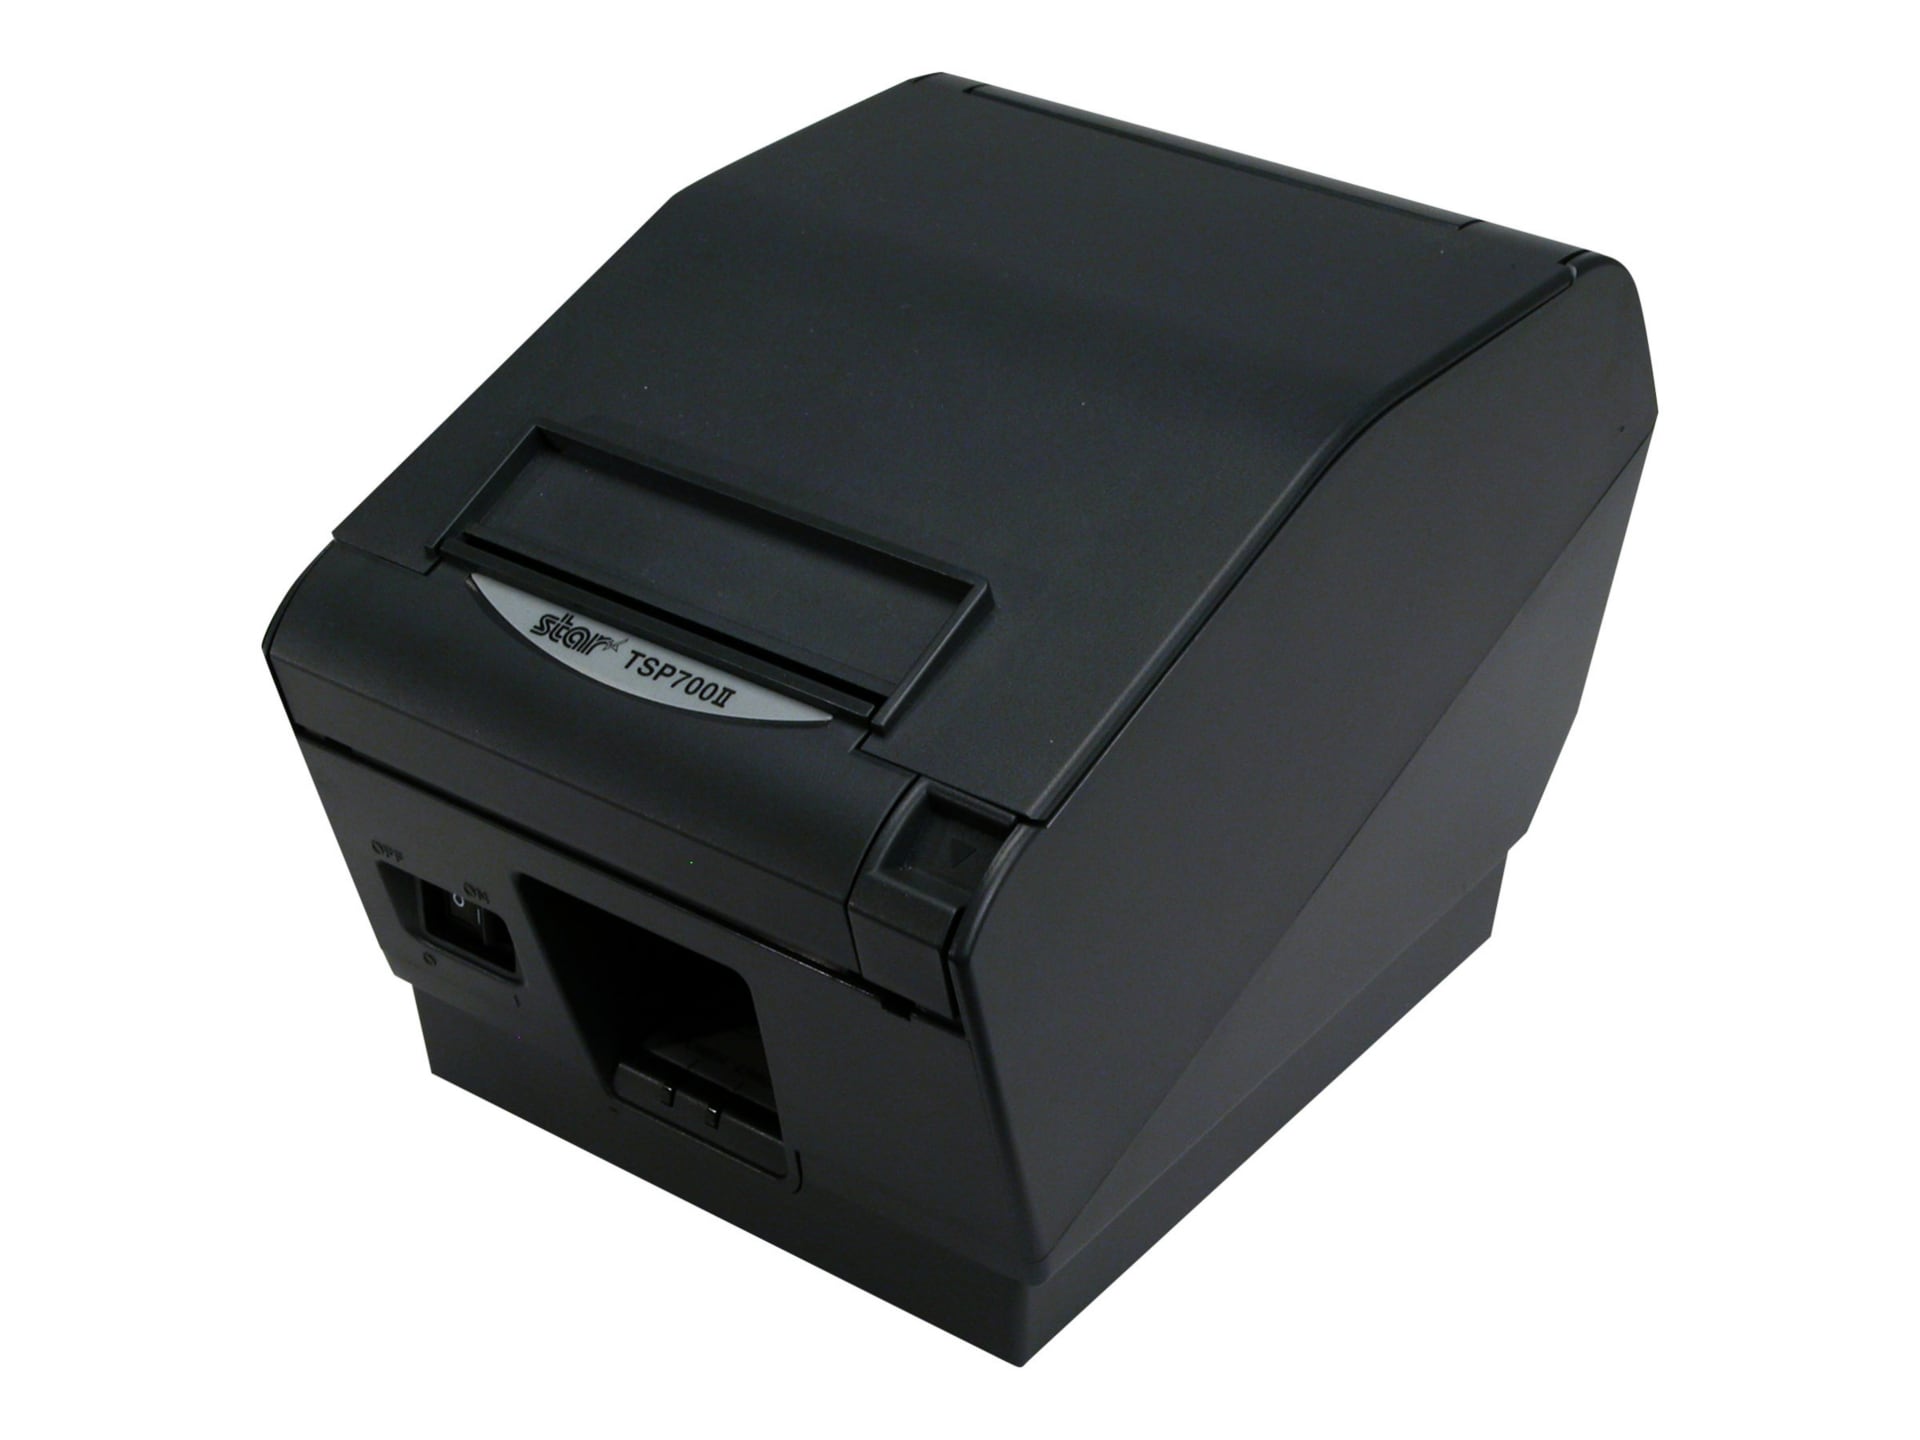 Star TSP 743IIU-24 Gry - receipt printer - two-color (monochrome) - direct